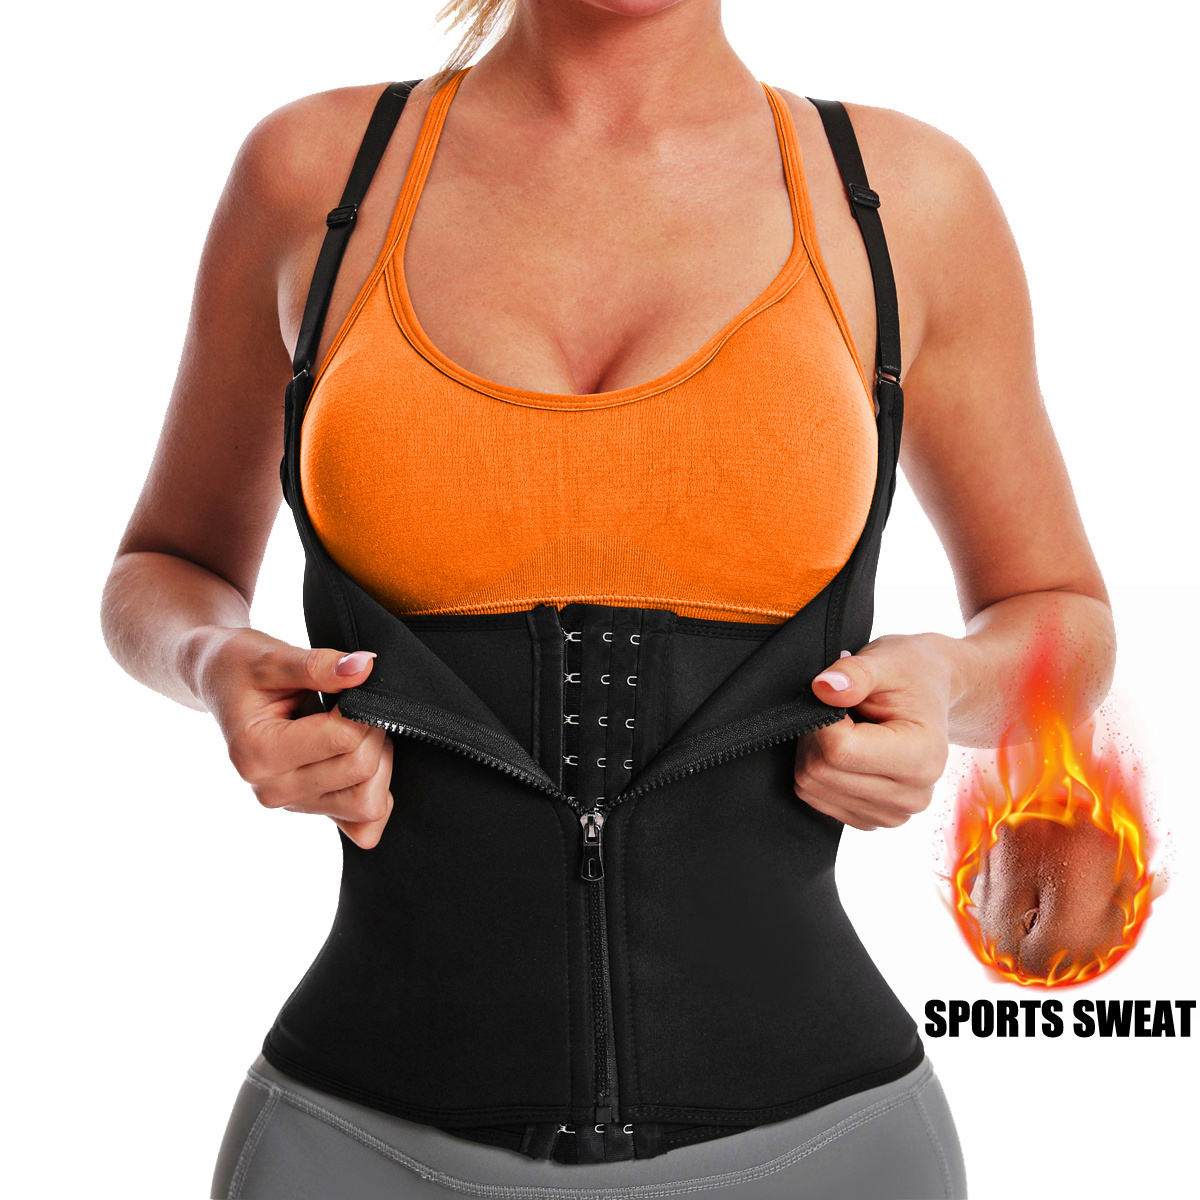 Waist Trainer Vest For Women Underbust Corset Slimming Body Shaper